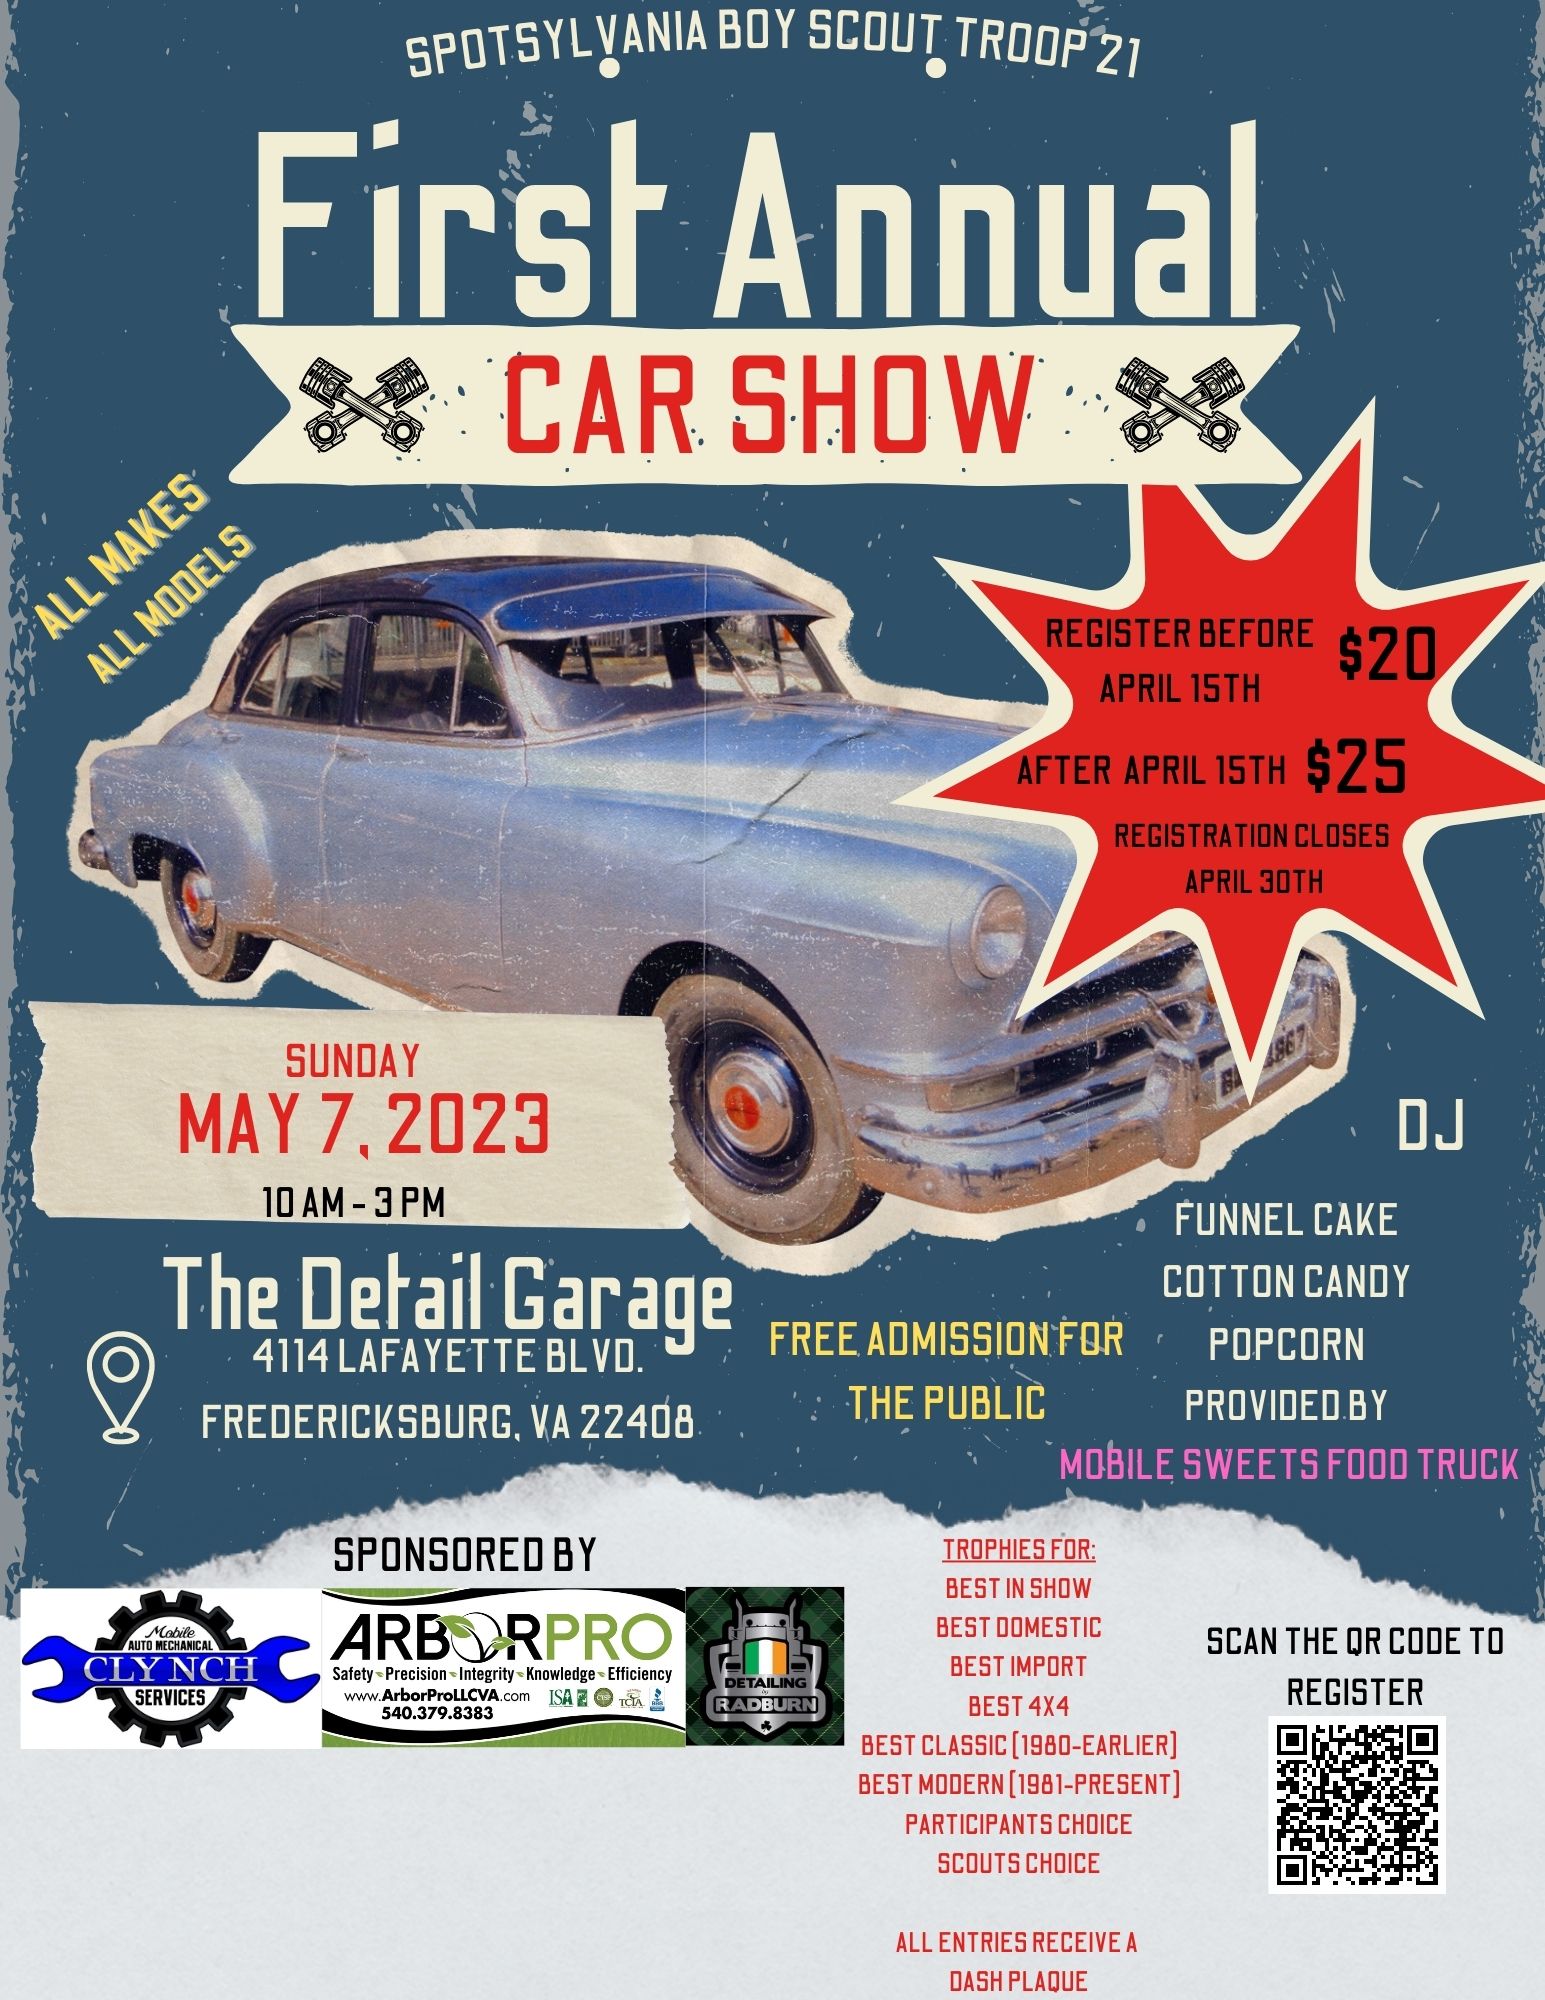 <h1 class="tribe-events-single-event-title">Spotsylvania Boy Scout Troop 21 Car Show Fundraiser</h1>